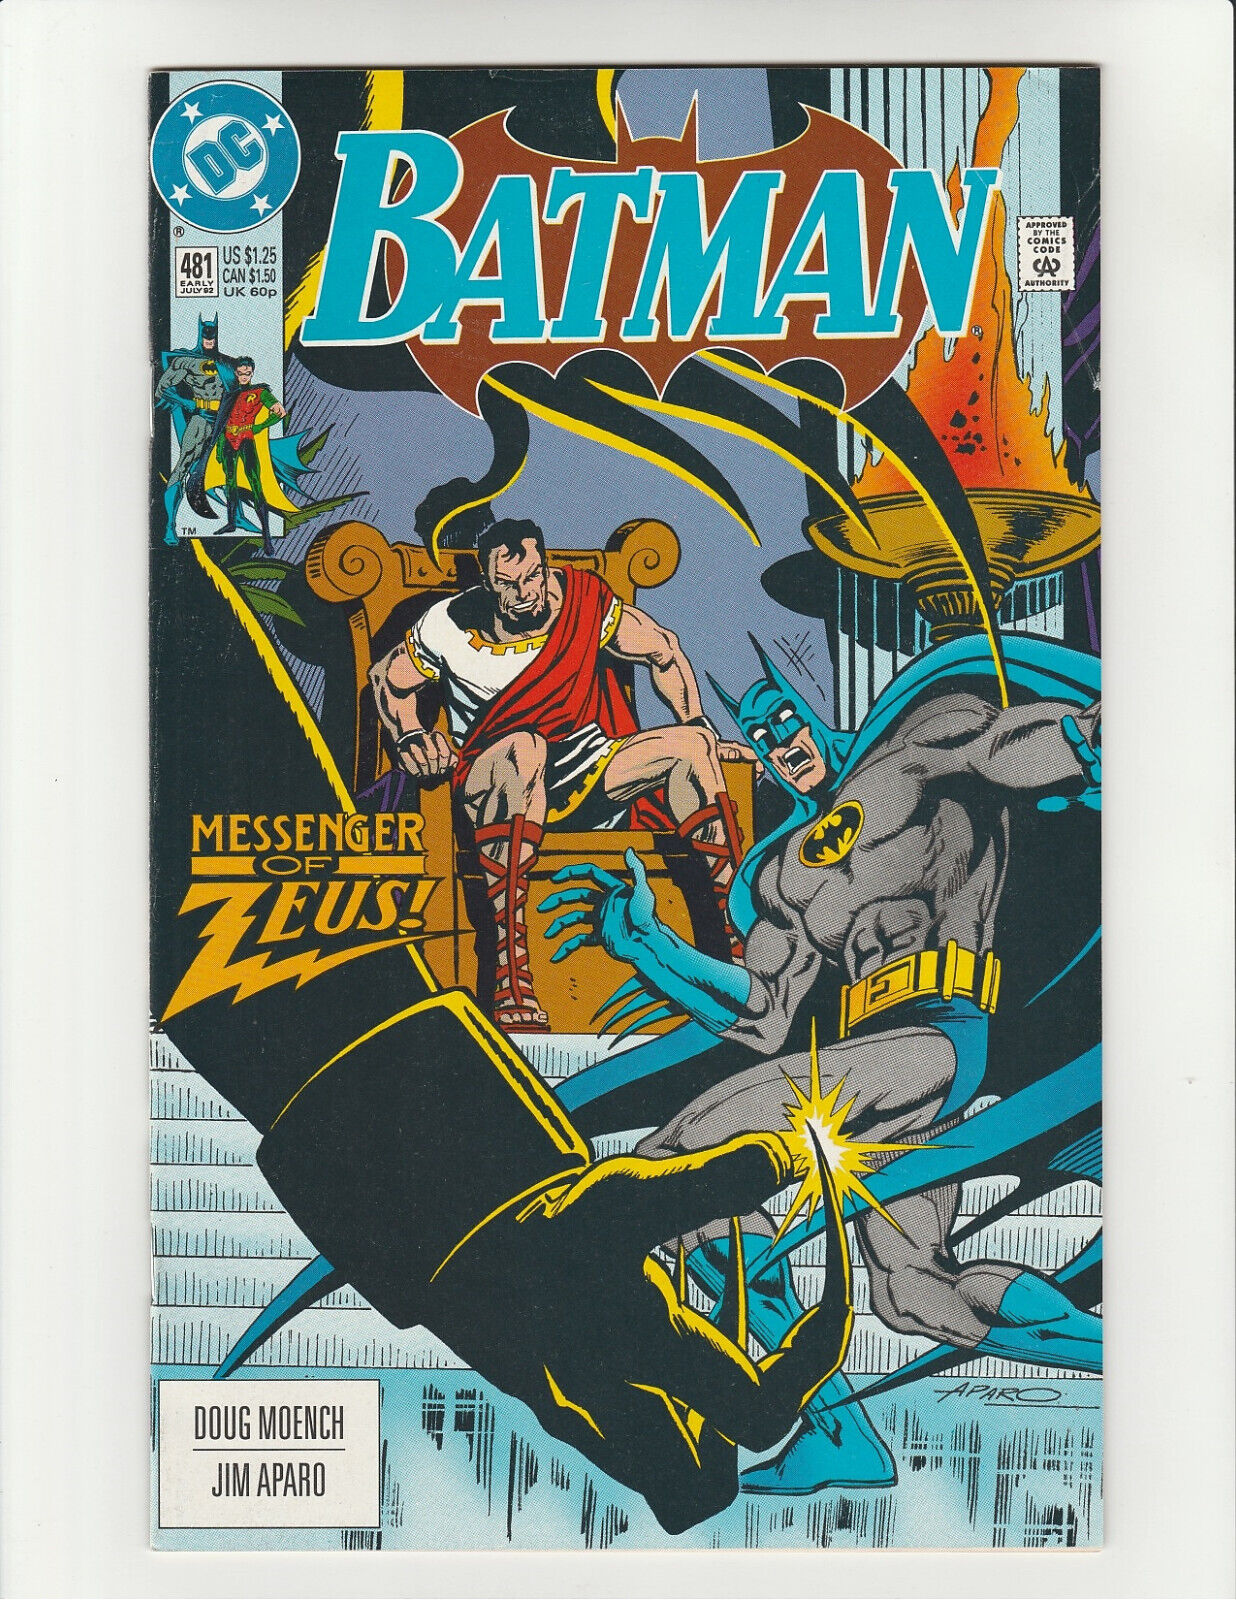 Batman #481 1992 DC Comics Comic Book Messenger of Zeus (8.0) Very Fine (VF)